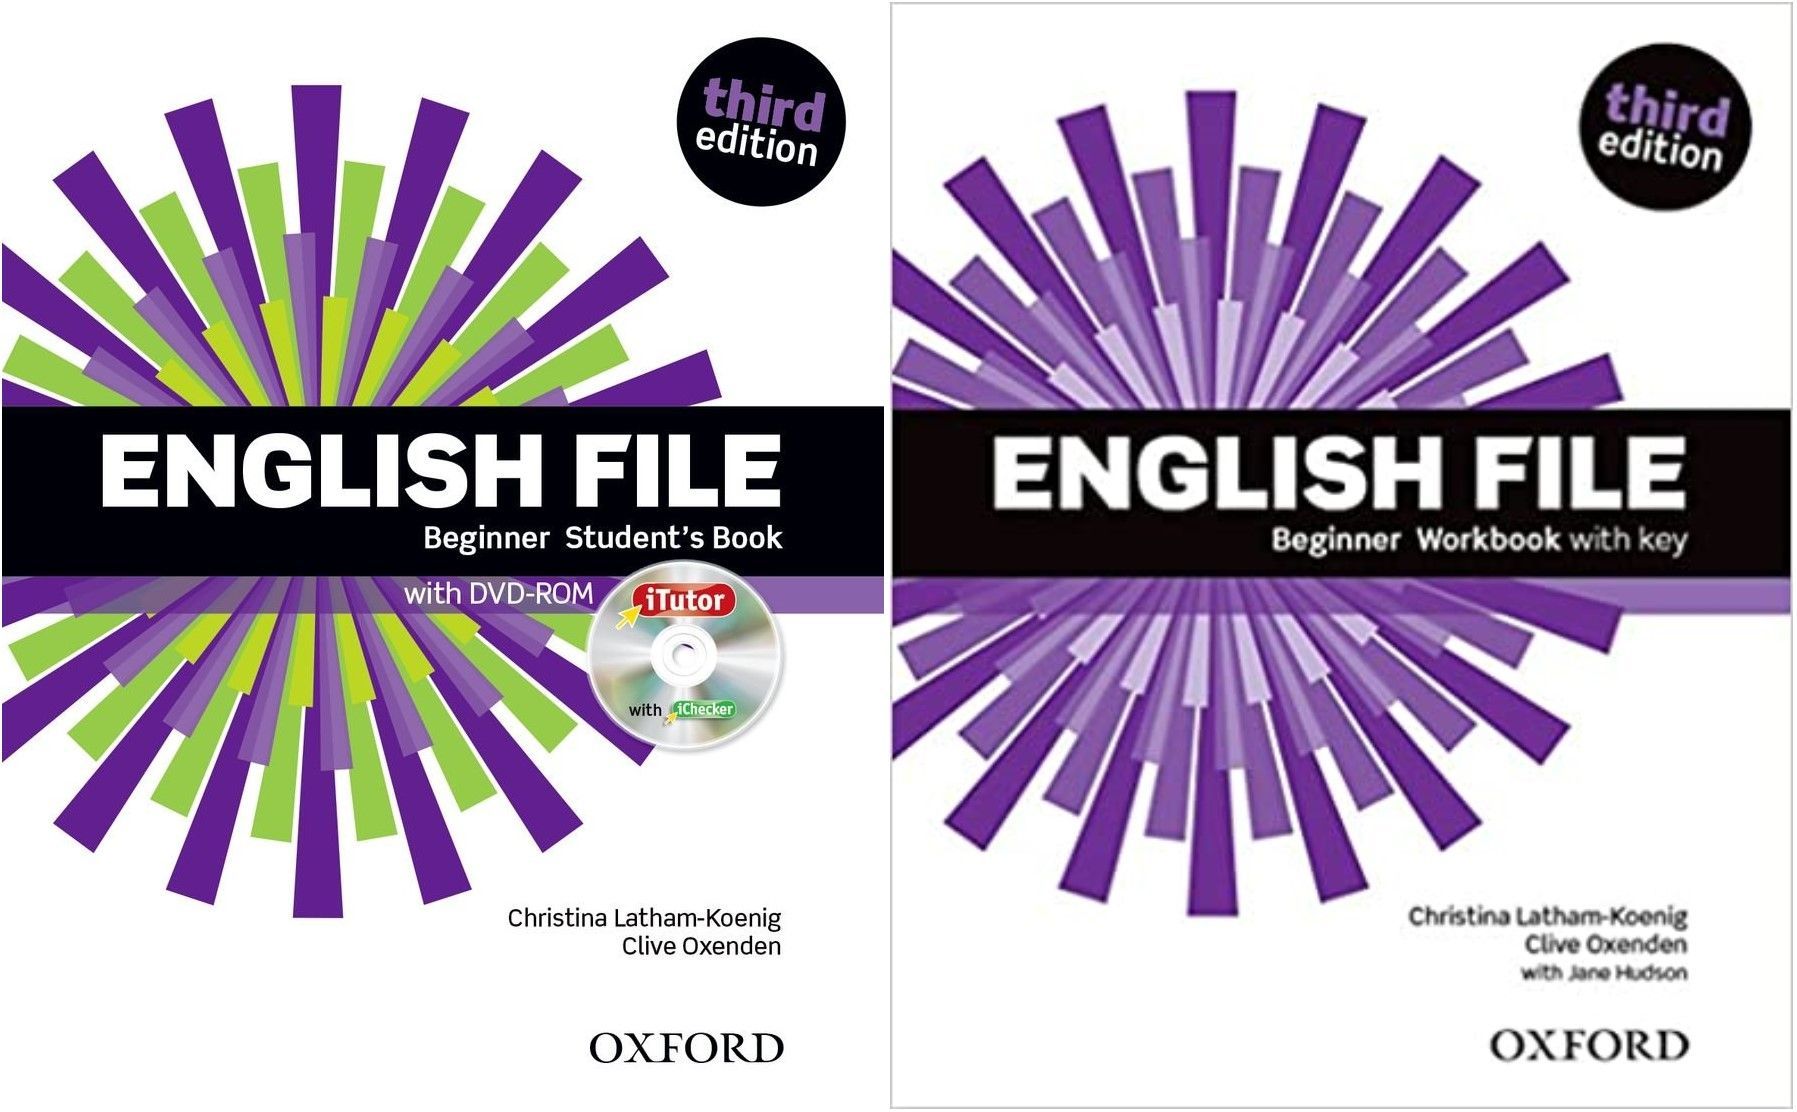 English file уровни. English file все уровни. English file 3rd Edition. English file все учебники. English file com